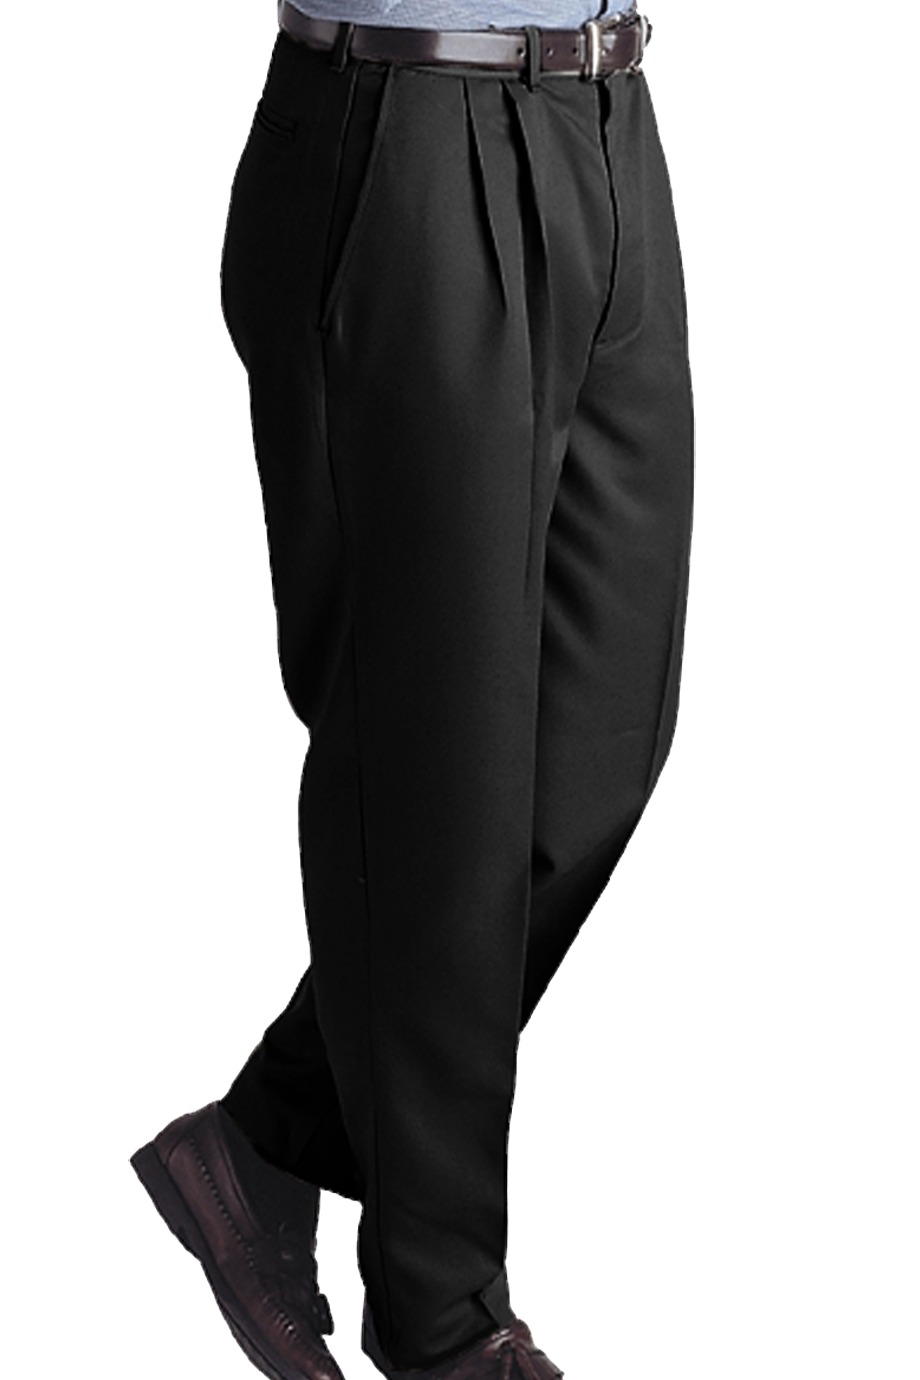 Edwards Garment 2674 - Men's Microfiber Pleated Pant